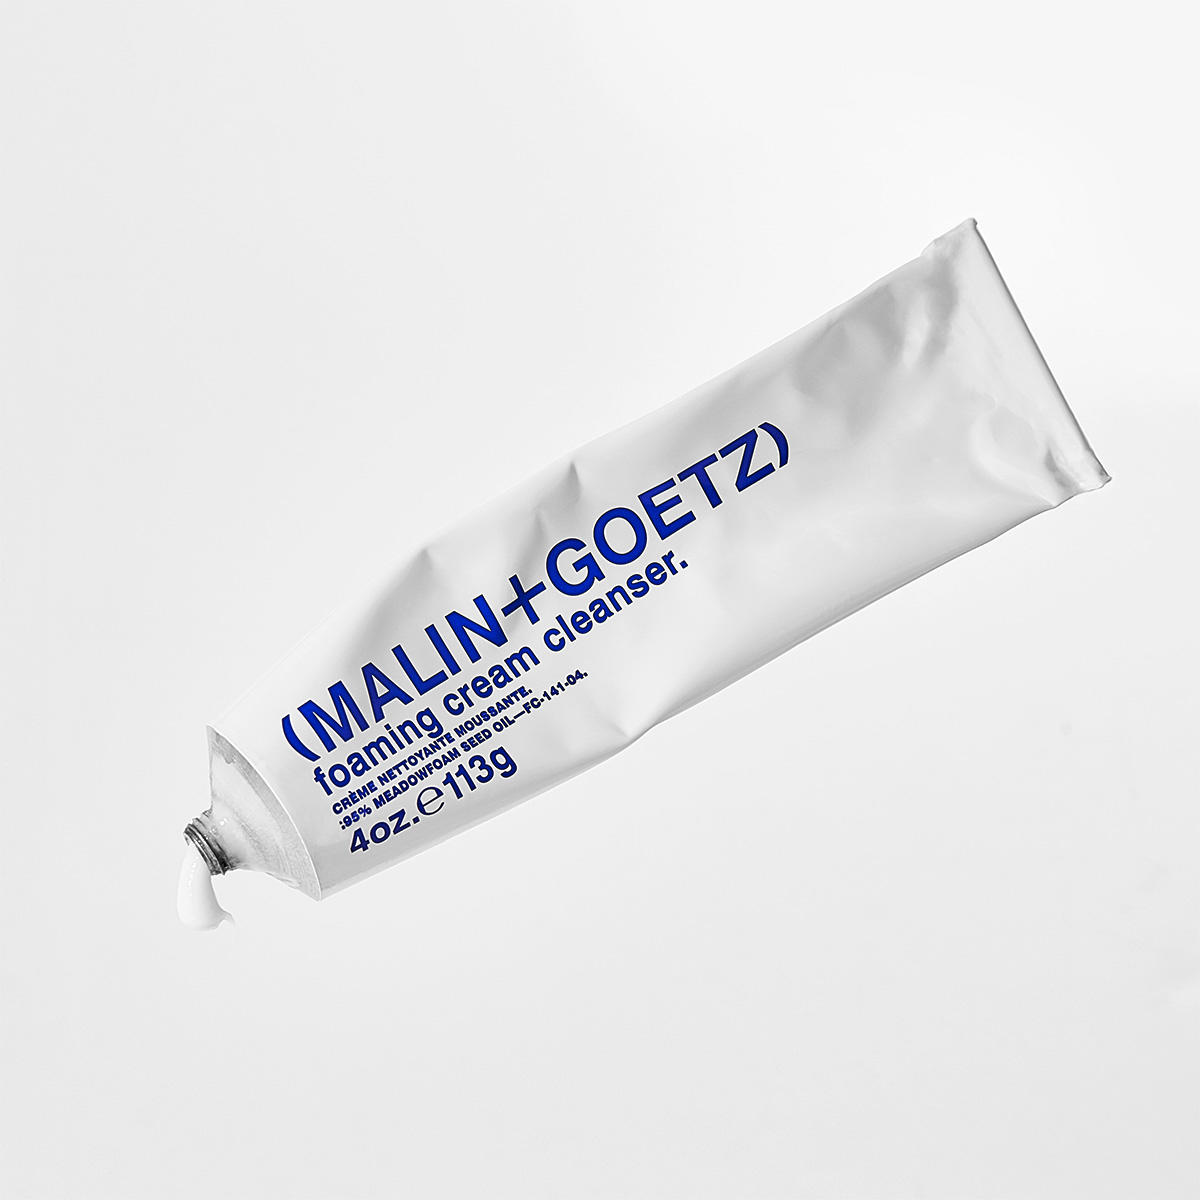 (MALIN+GOETZ) Foaming Cream Cleanser 113 g - 4